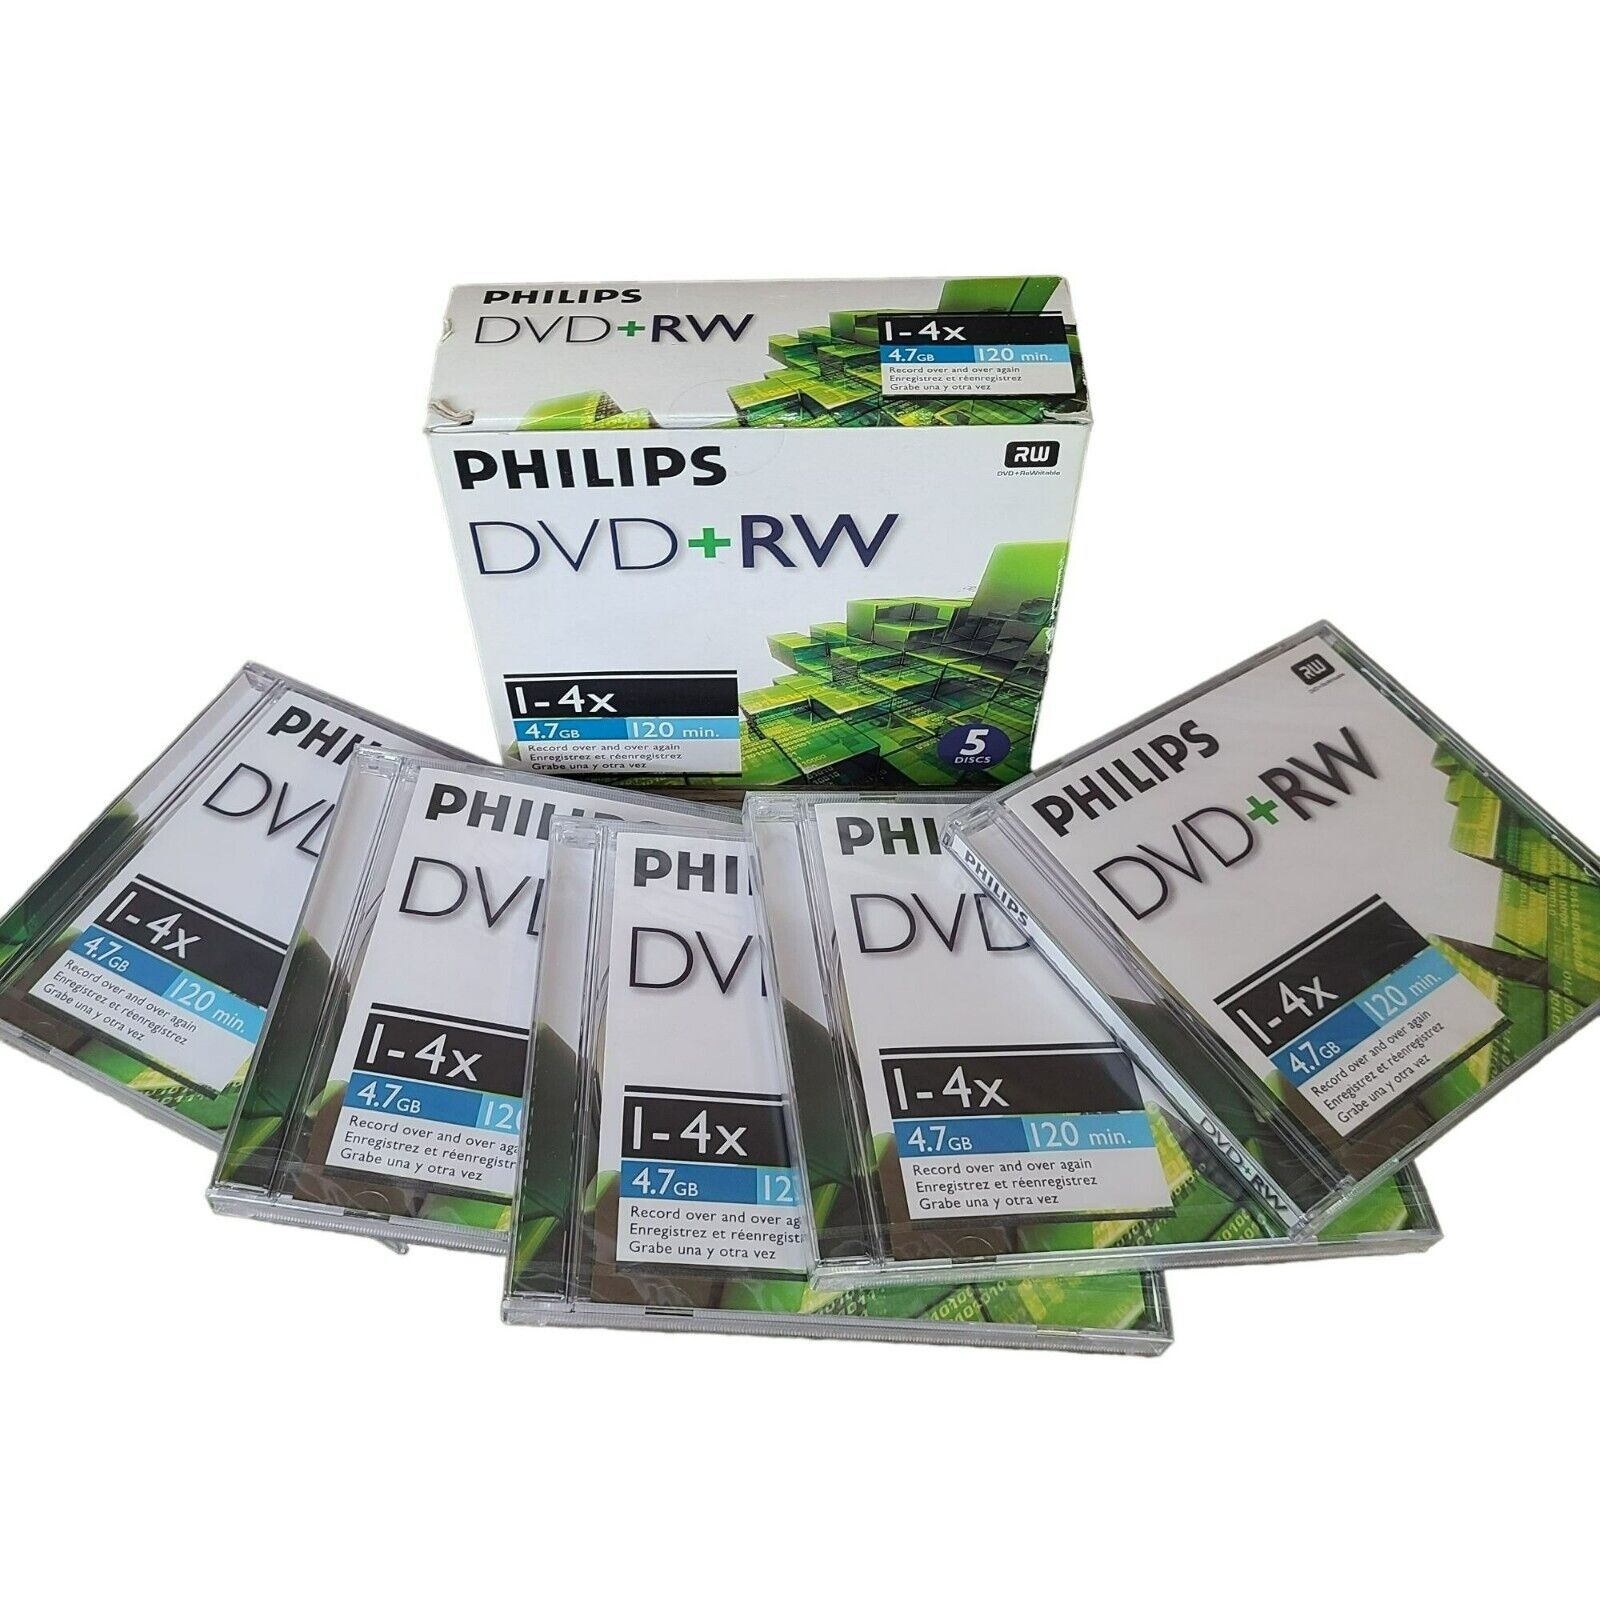 Philips DVD+RW Re-Writable 5 Pack 120 Min 4.7 GB 1x-4x New Open Box